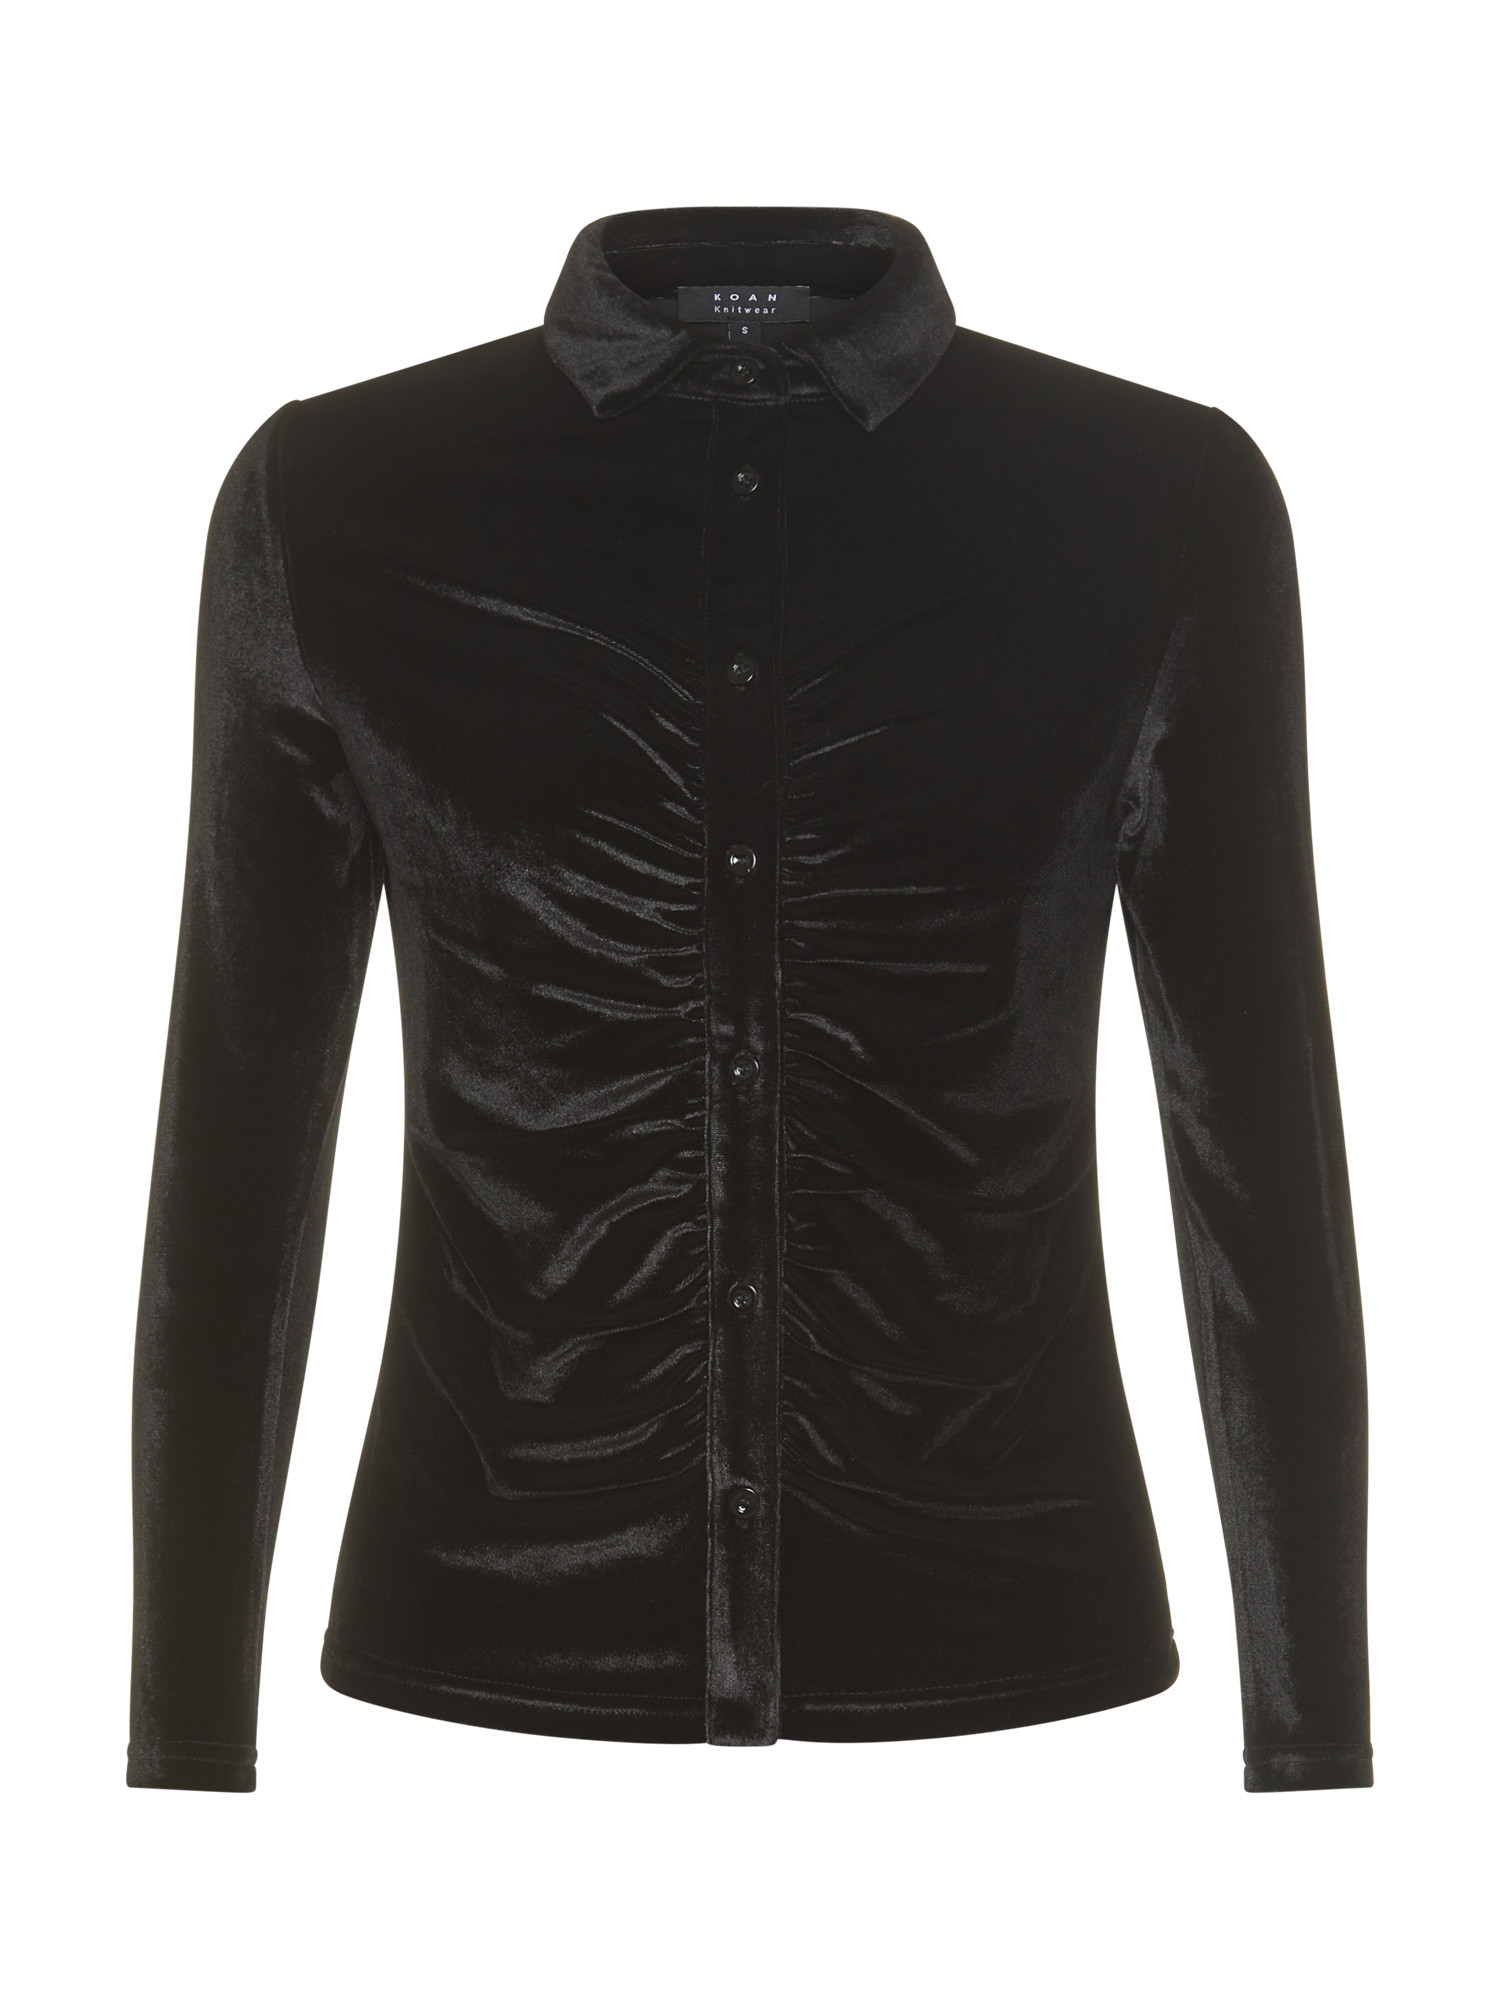 Koan - Stretch velvet shirt with gathering, Black, large image number 0